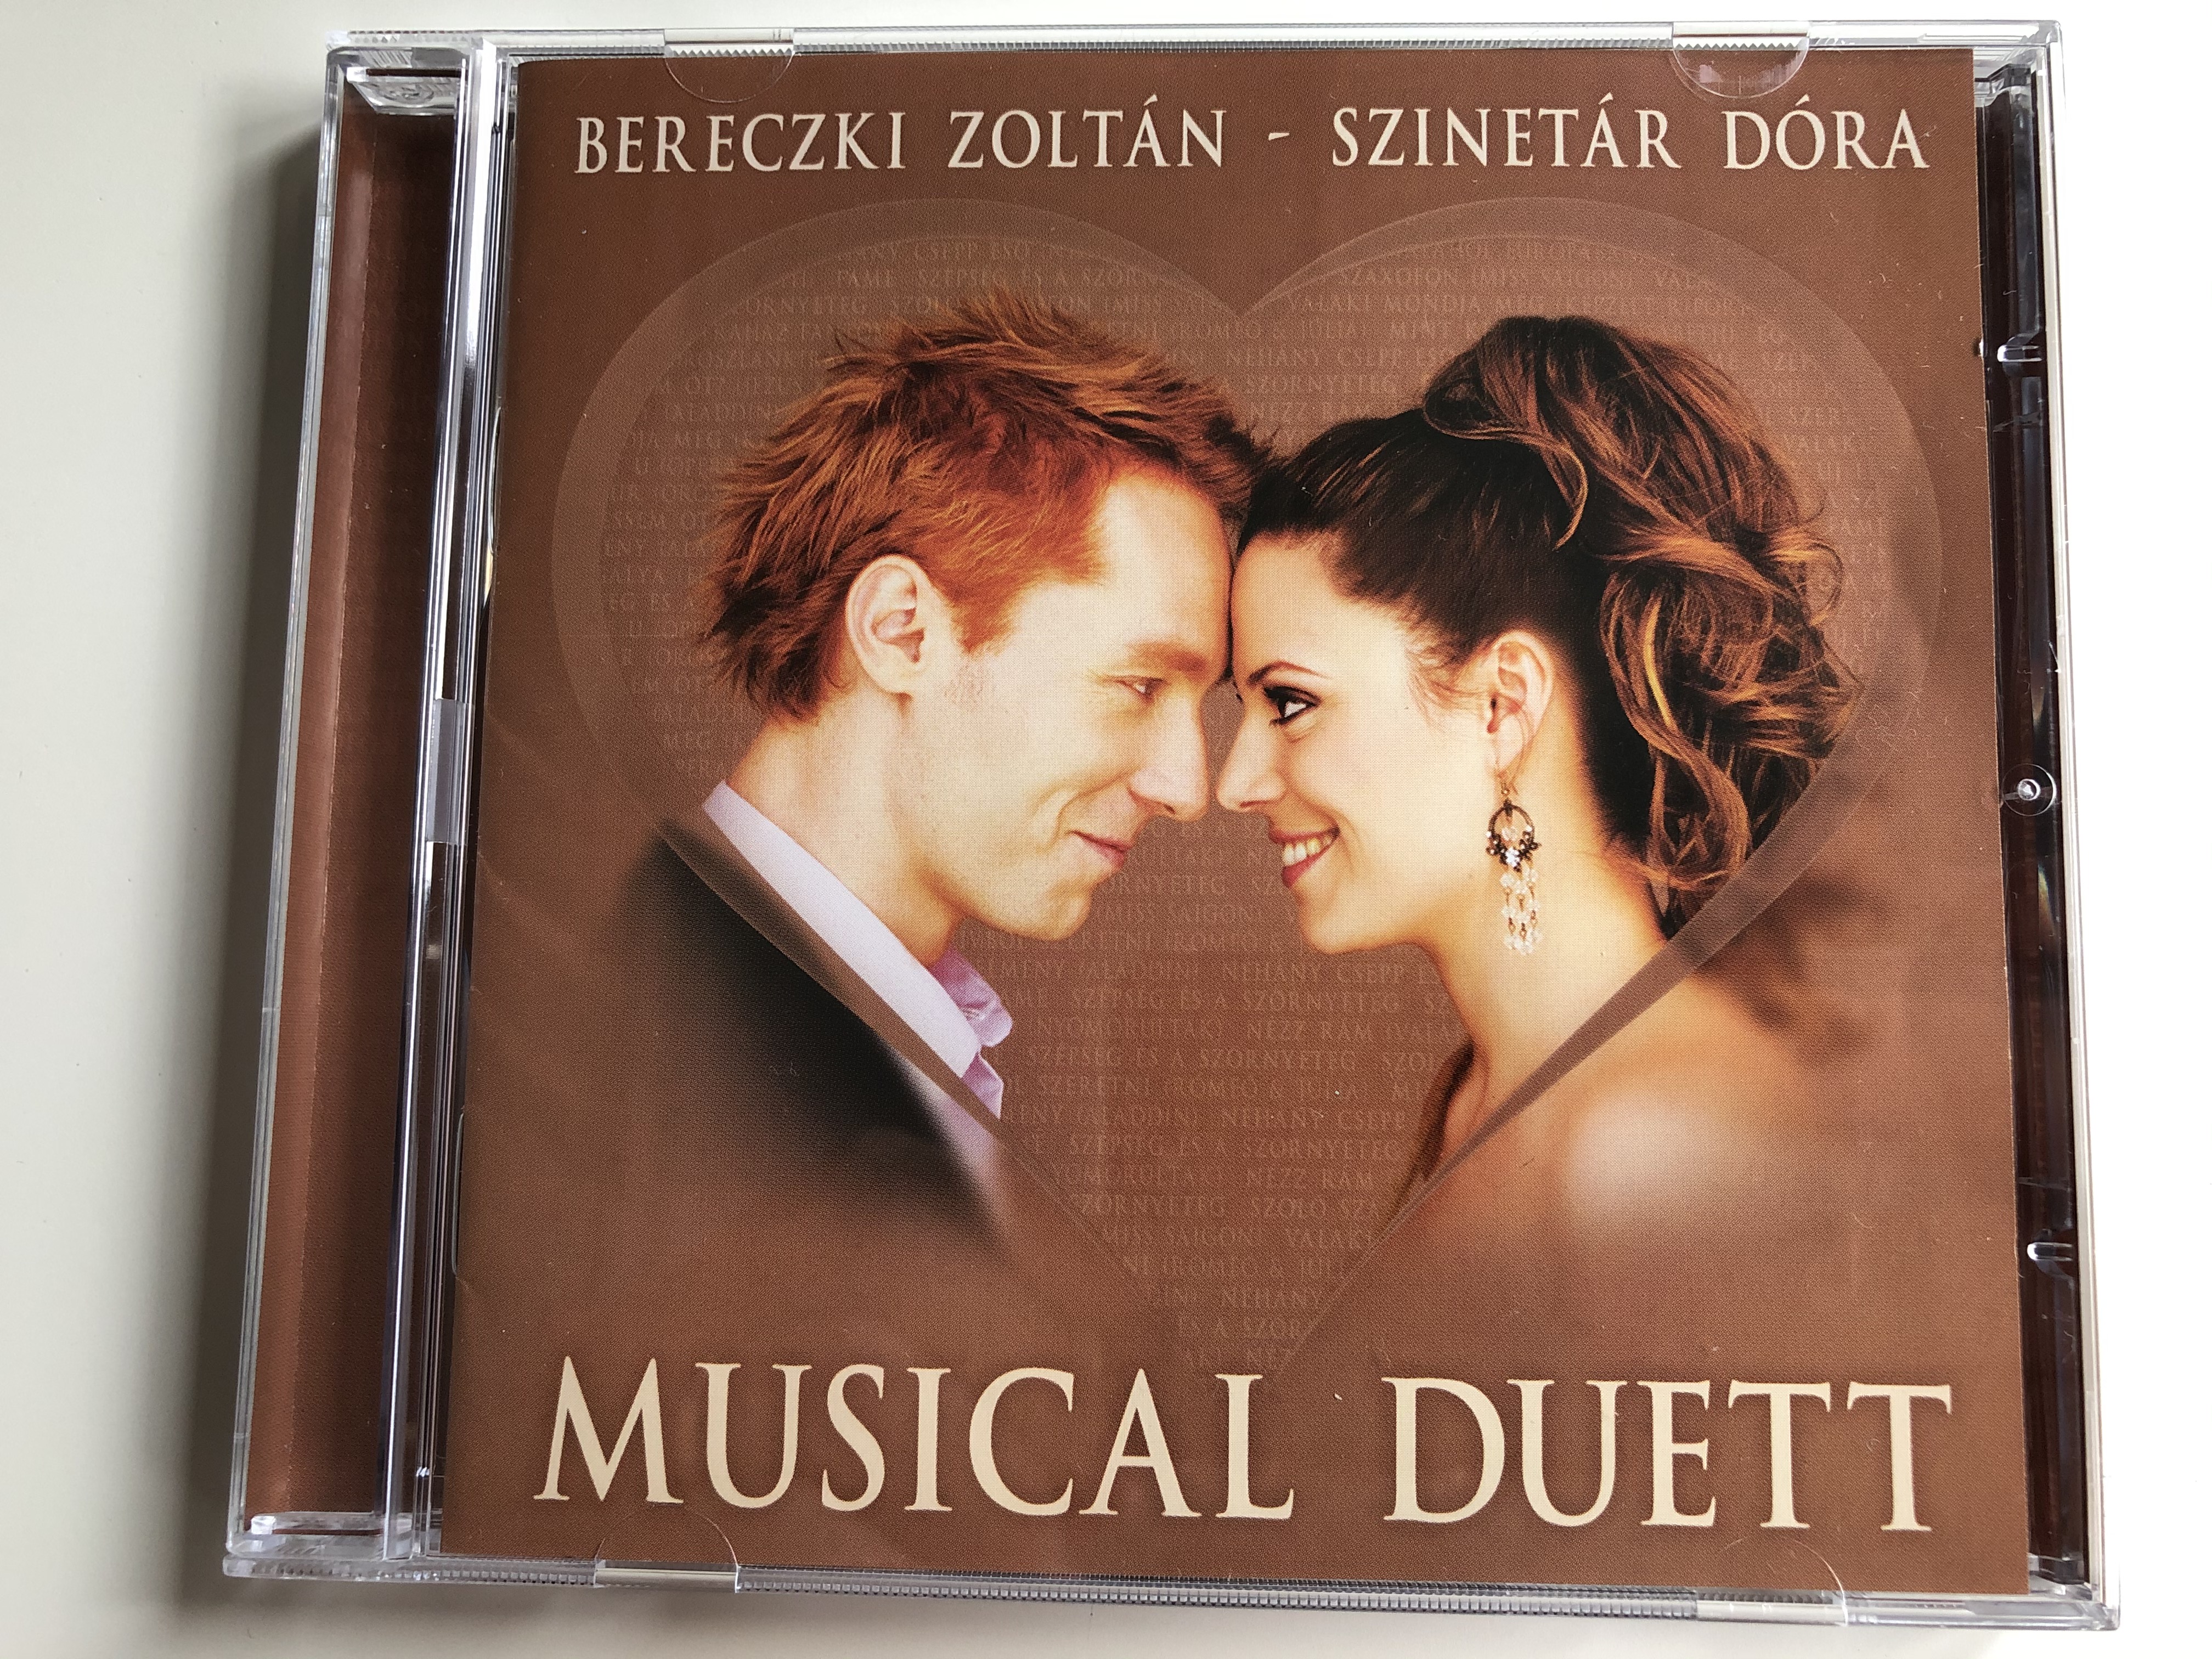 bereczki-zolt-n-szinet-r-d-ra-musical-duett-emi-audio-cd-2007-392571-2-1-.jpg